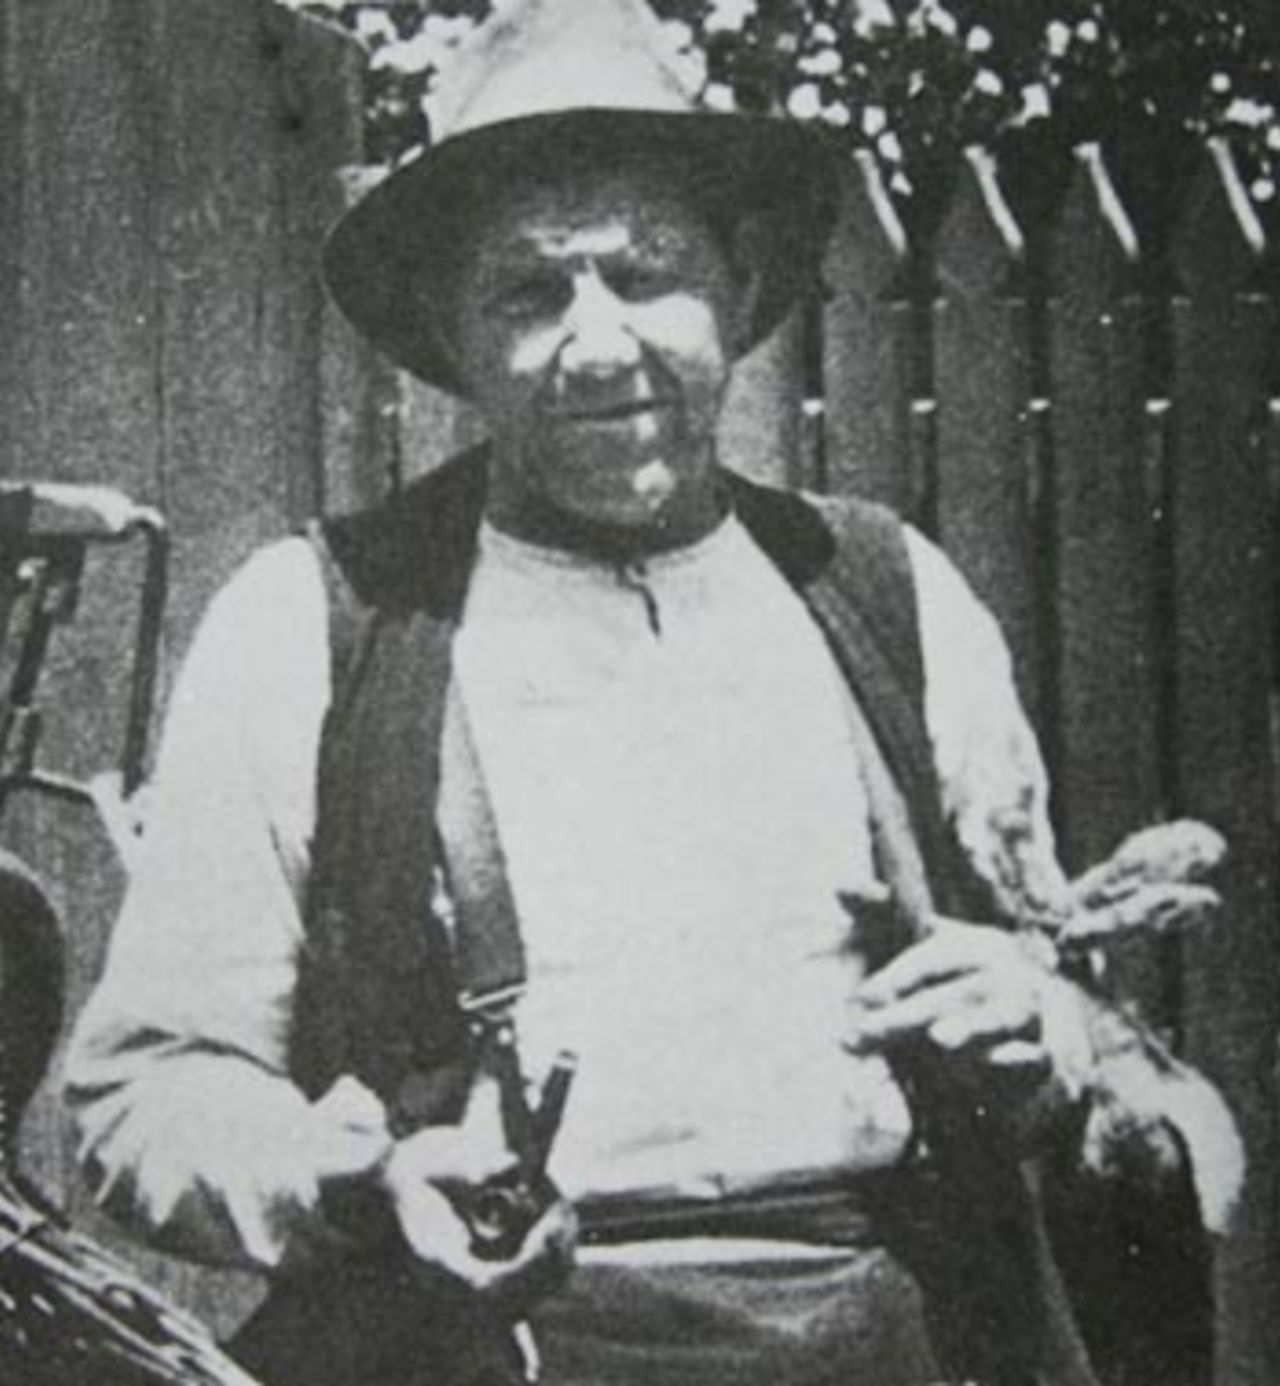 Yabba doing his day job, 1932